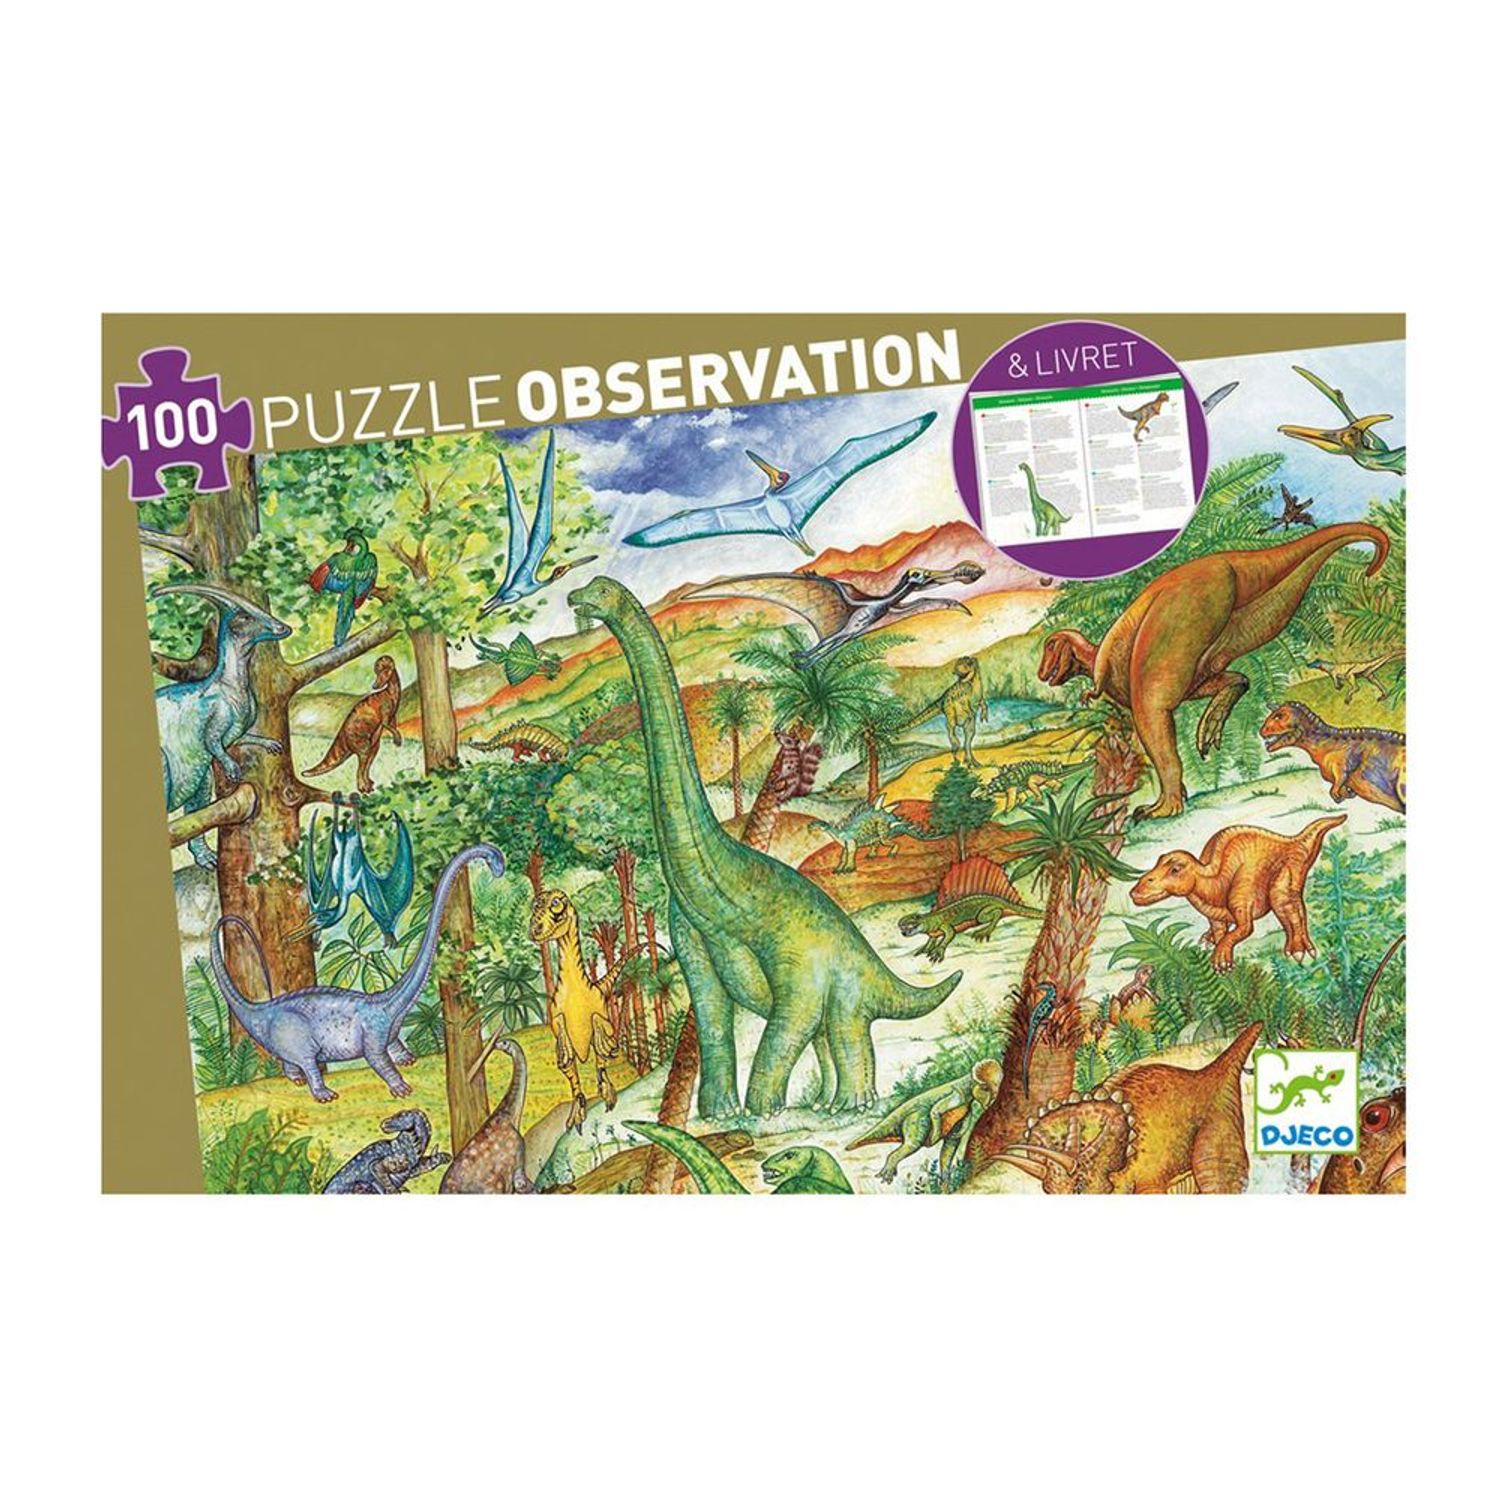 Juguete Rompecabezas de Observacion Dinosaurios Djeco 100 pzs | Oechsle -  Oechsle